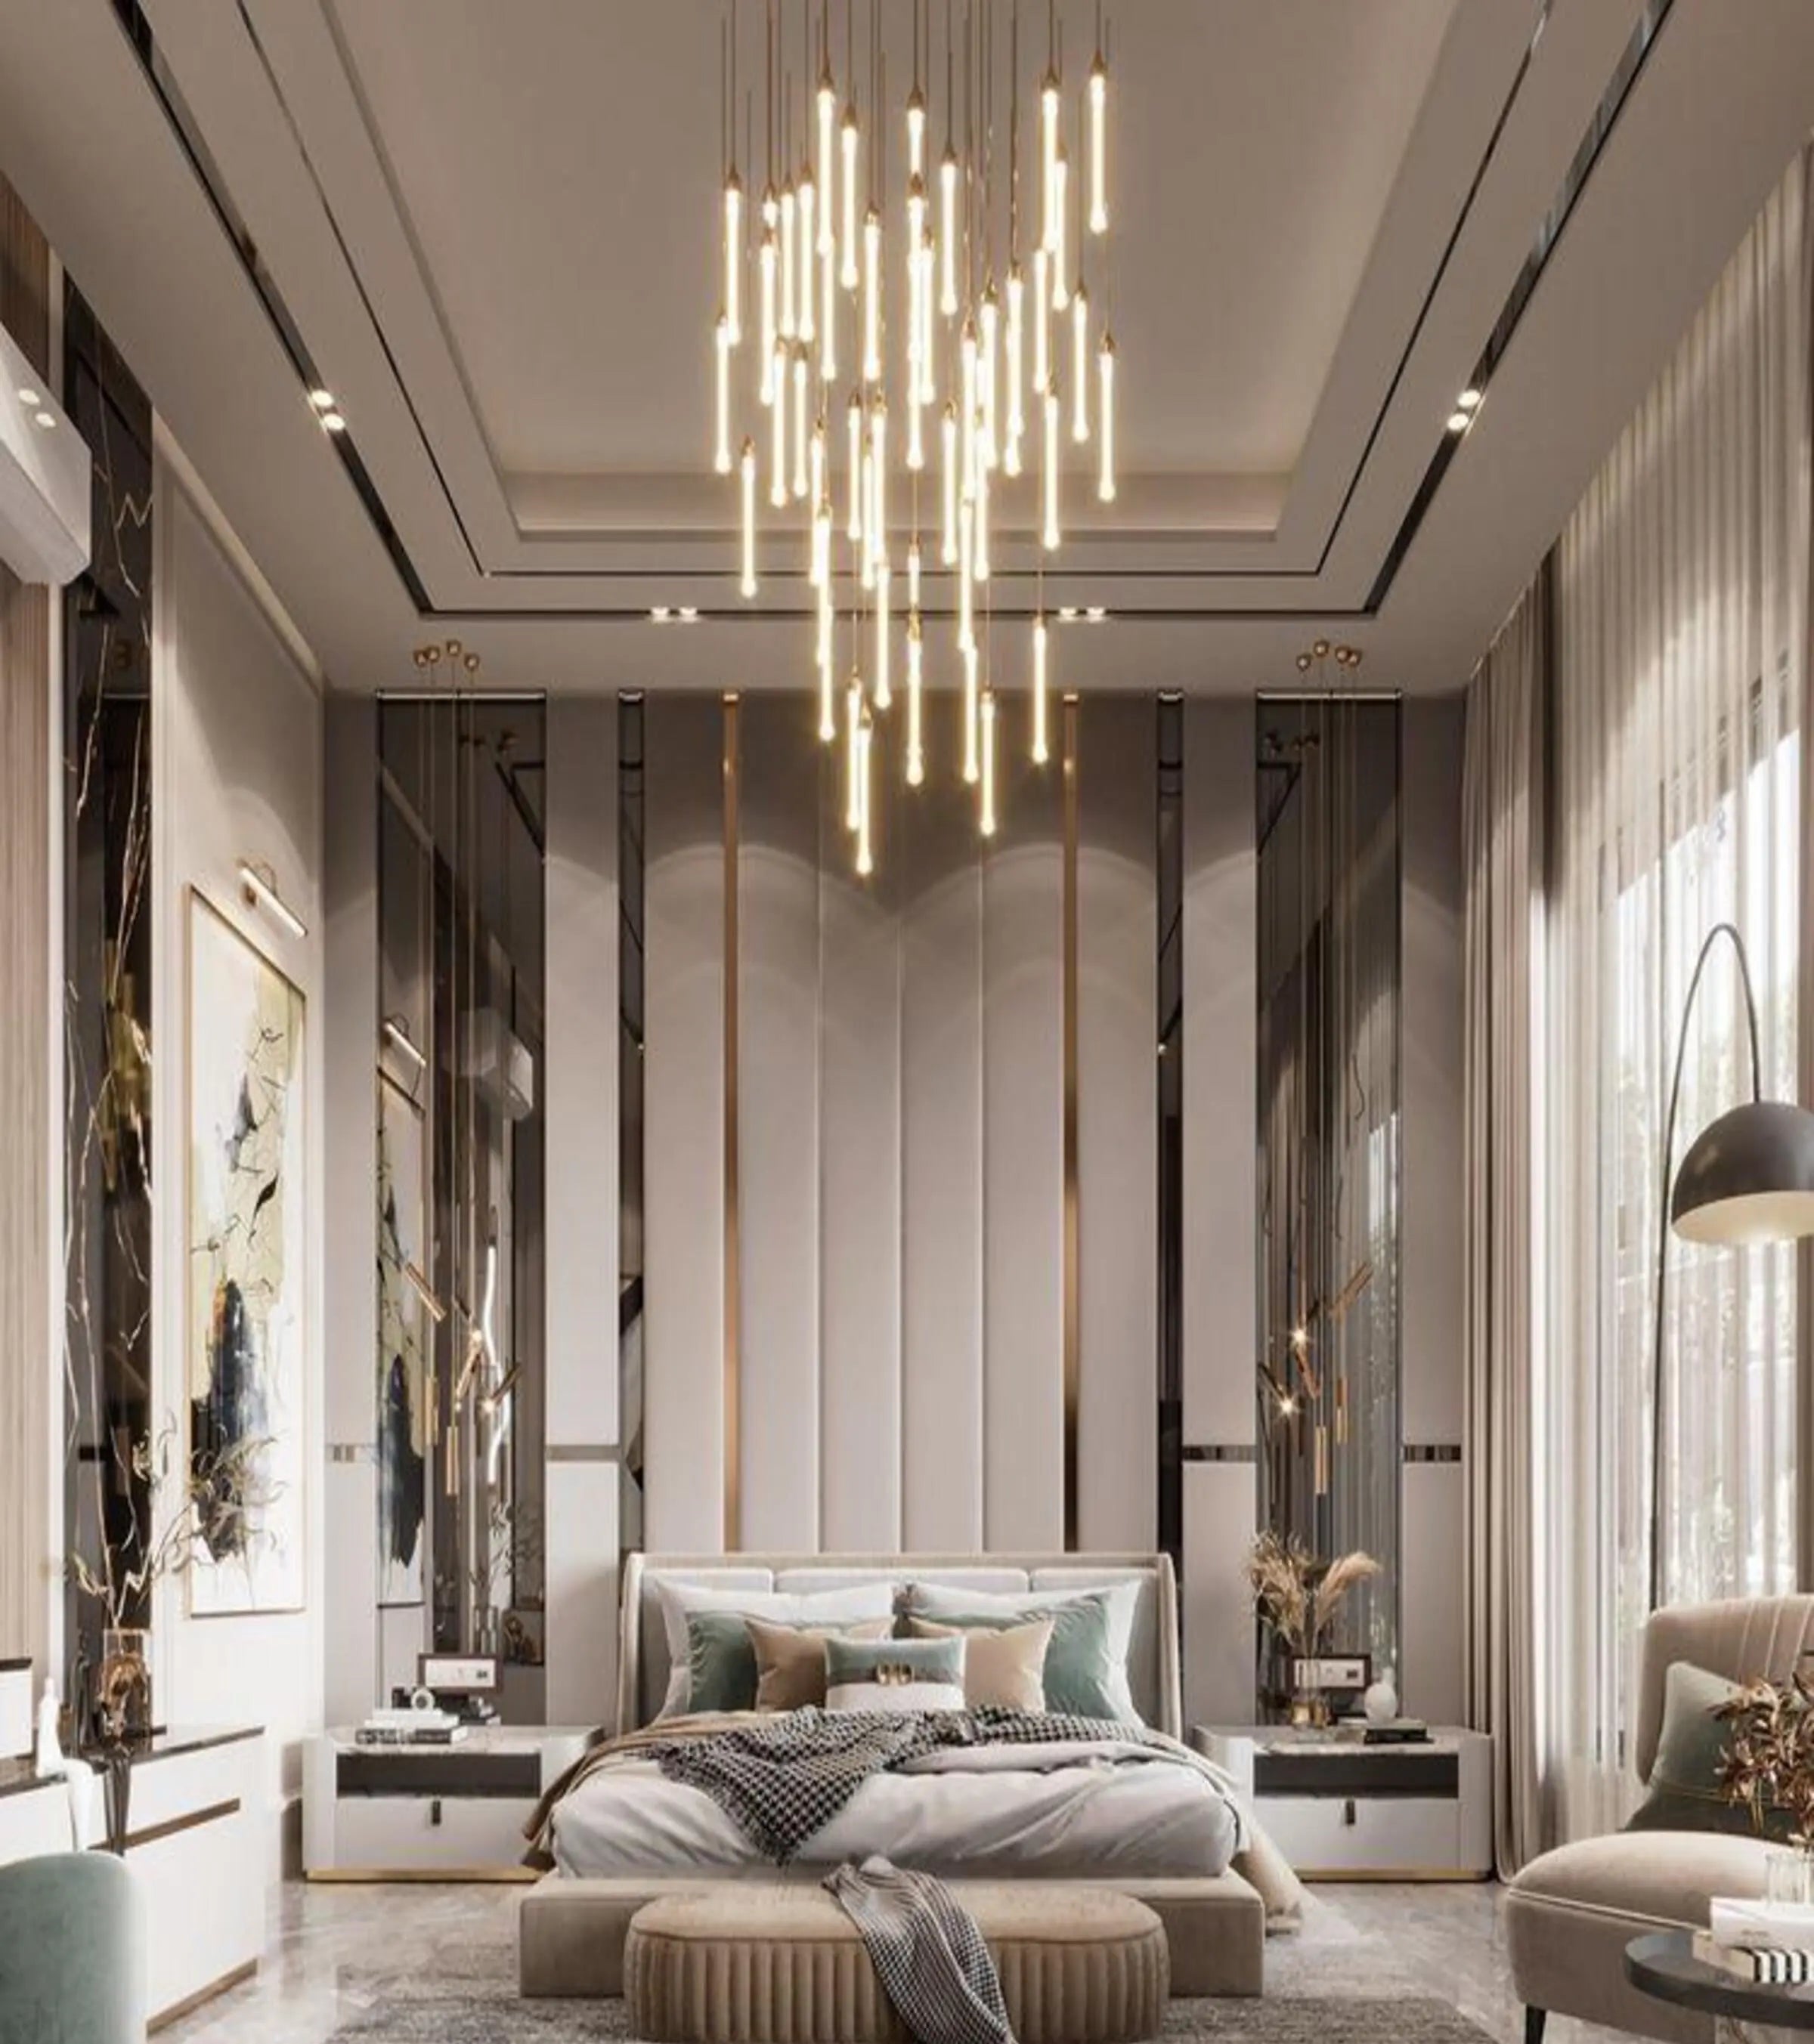 Kori White & Beige Luxury Bed ANGIE HOMES